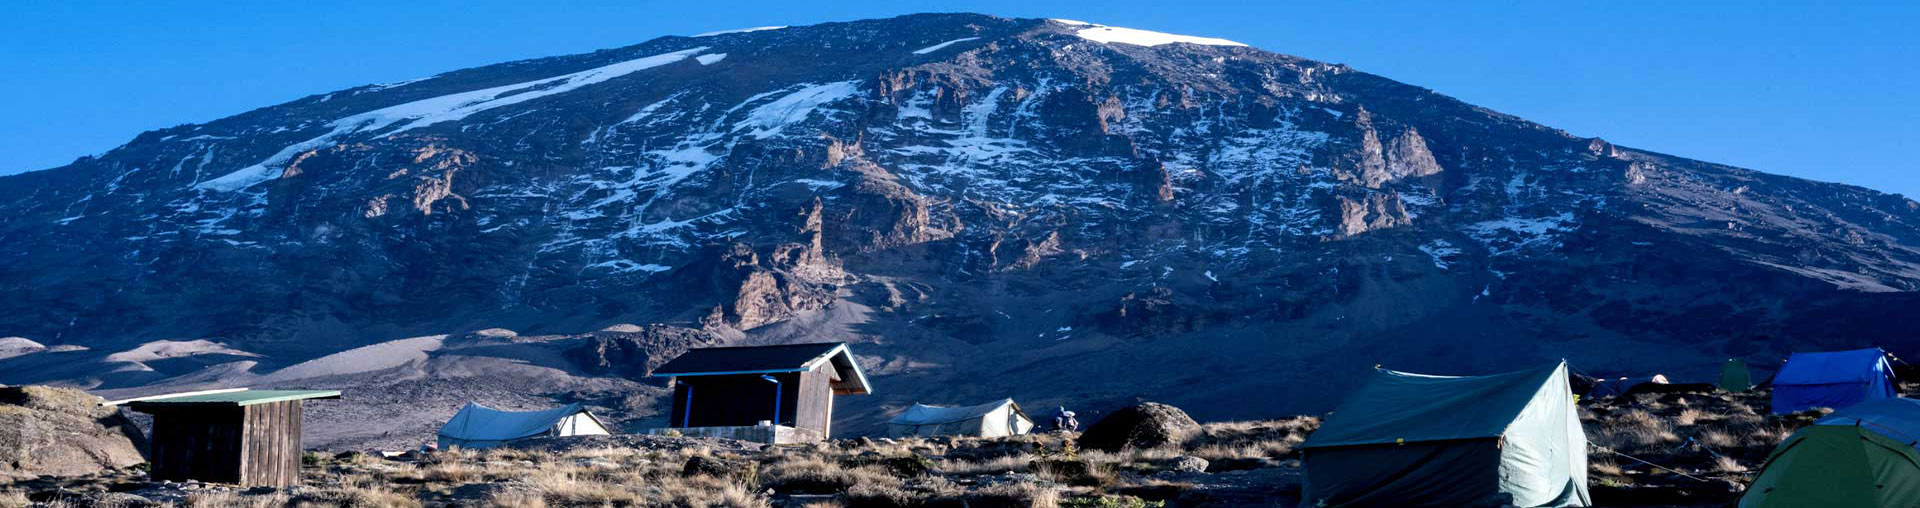 Mt Kilimanjaro Trek In Tanzania Tour Package From India